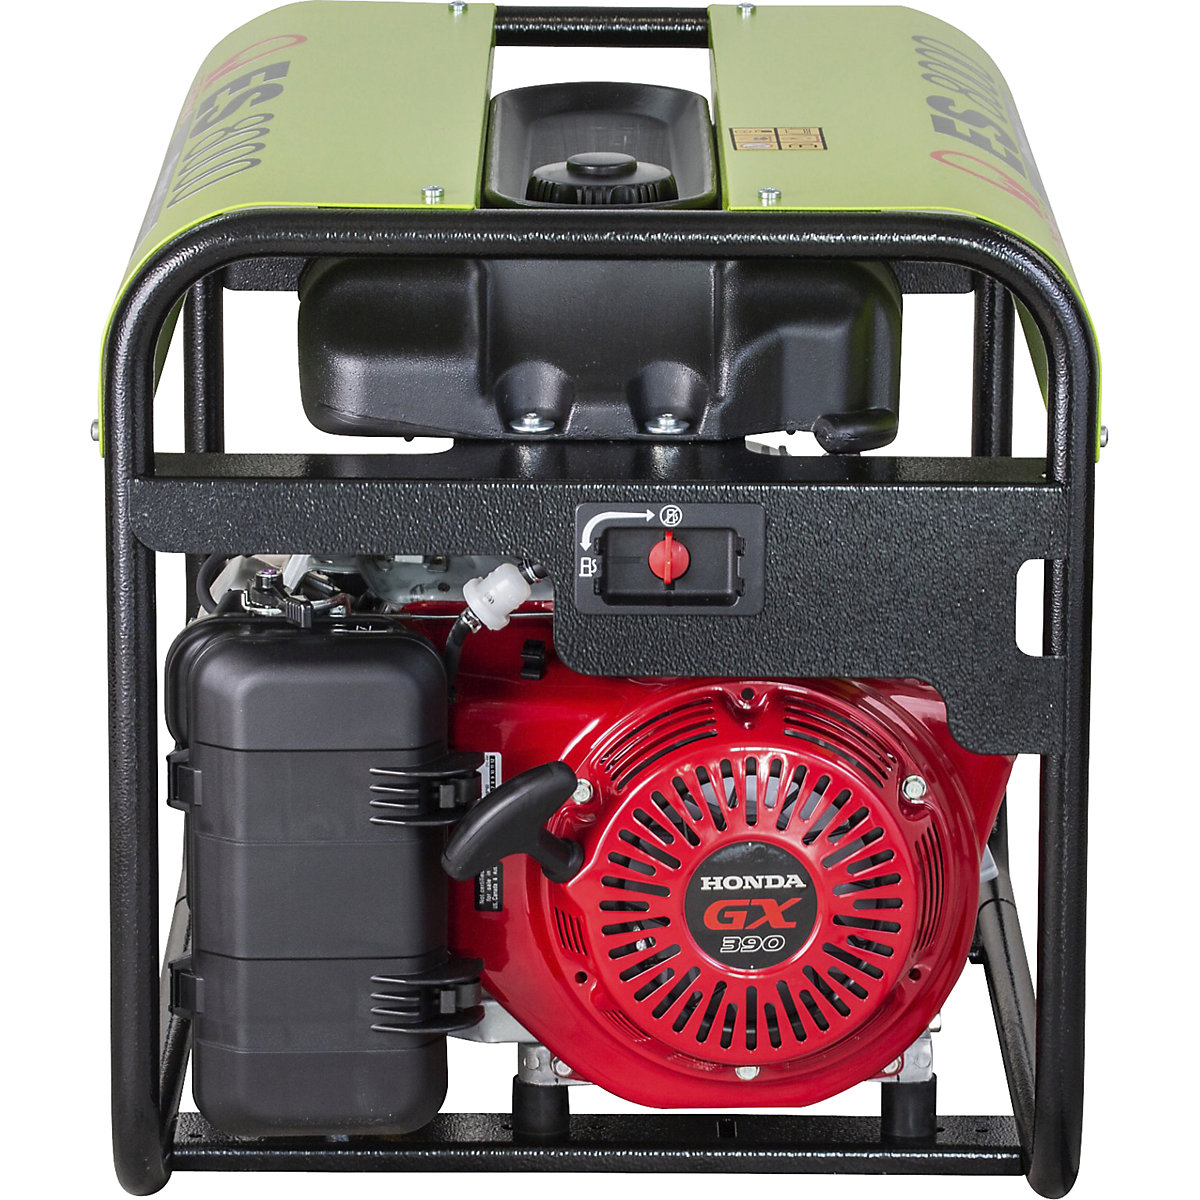 ES series power generator – petrol 400/230 V – Pramac (Product illustration 2)-1